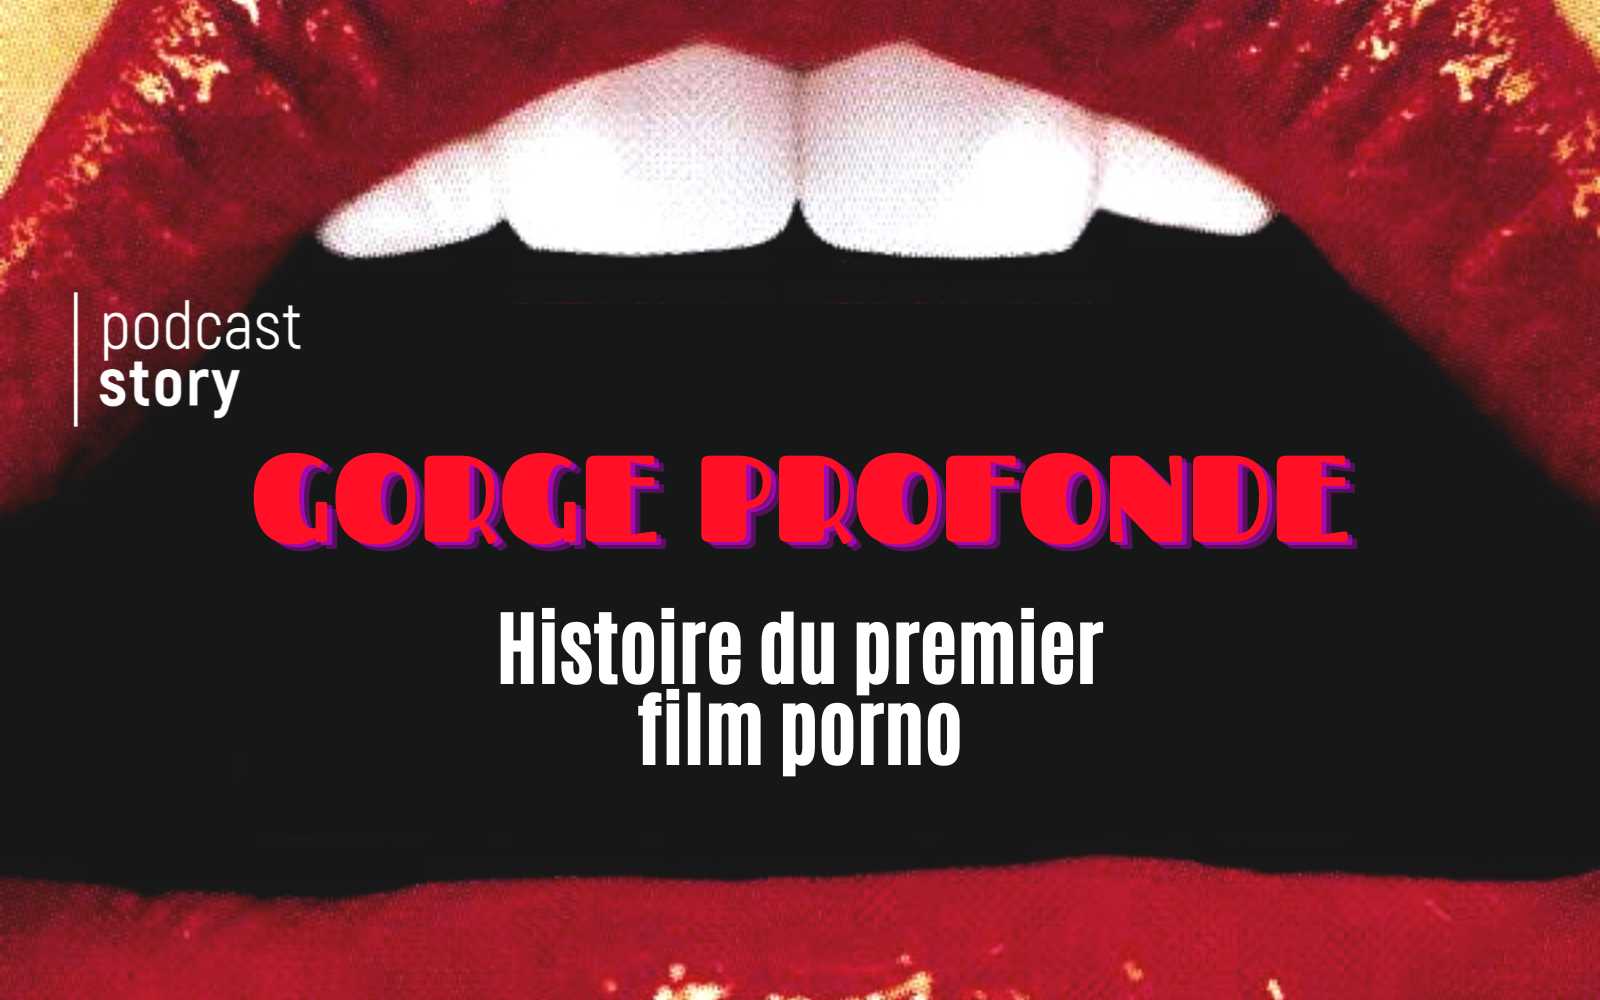 GORGE PROFONDE – HISTOIRE DU PREMIER FILM PORNO